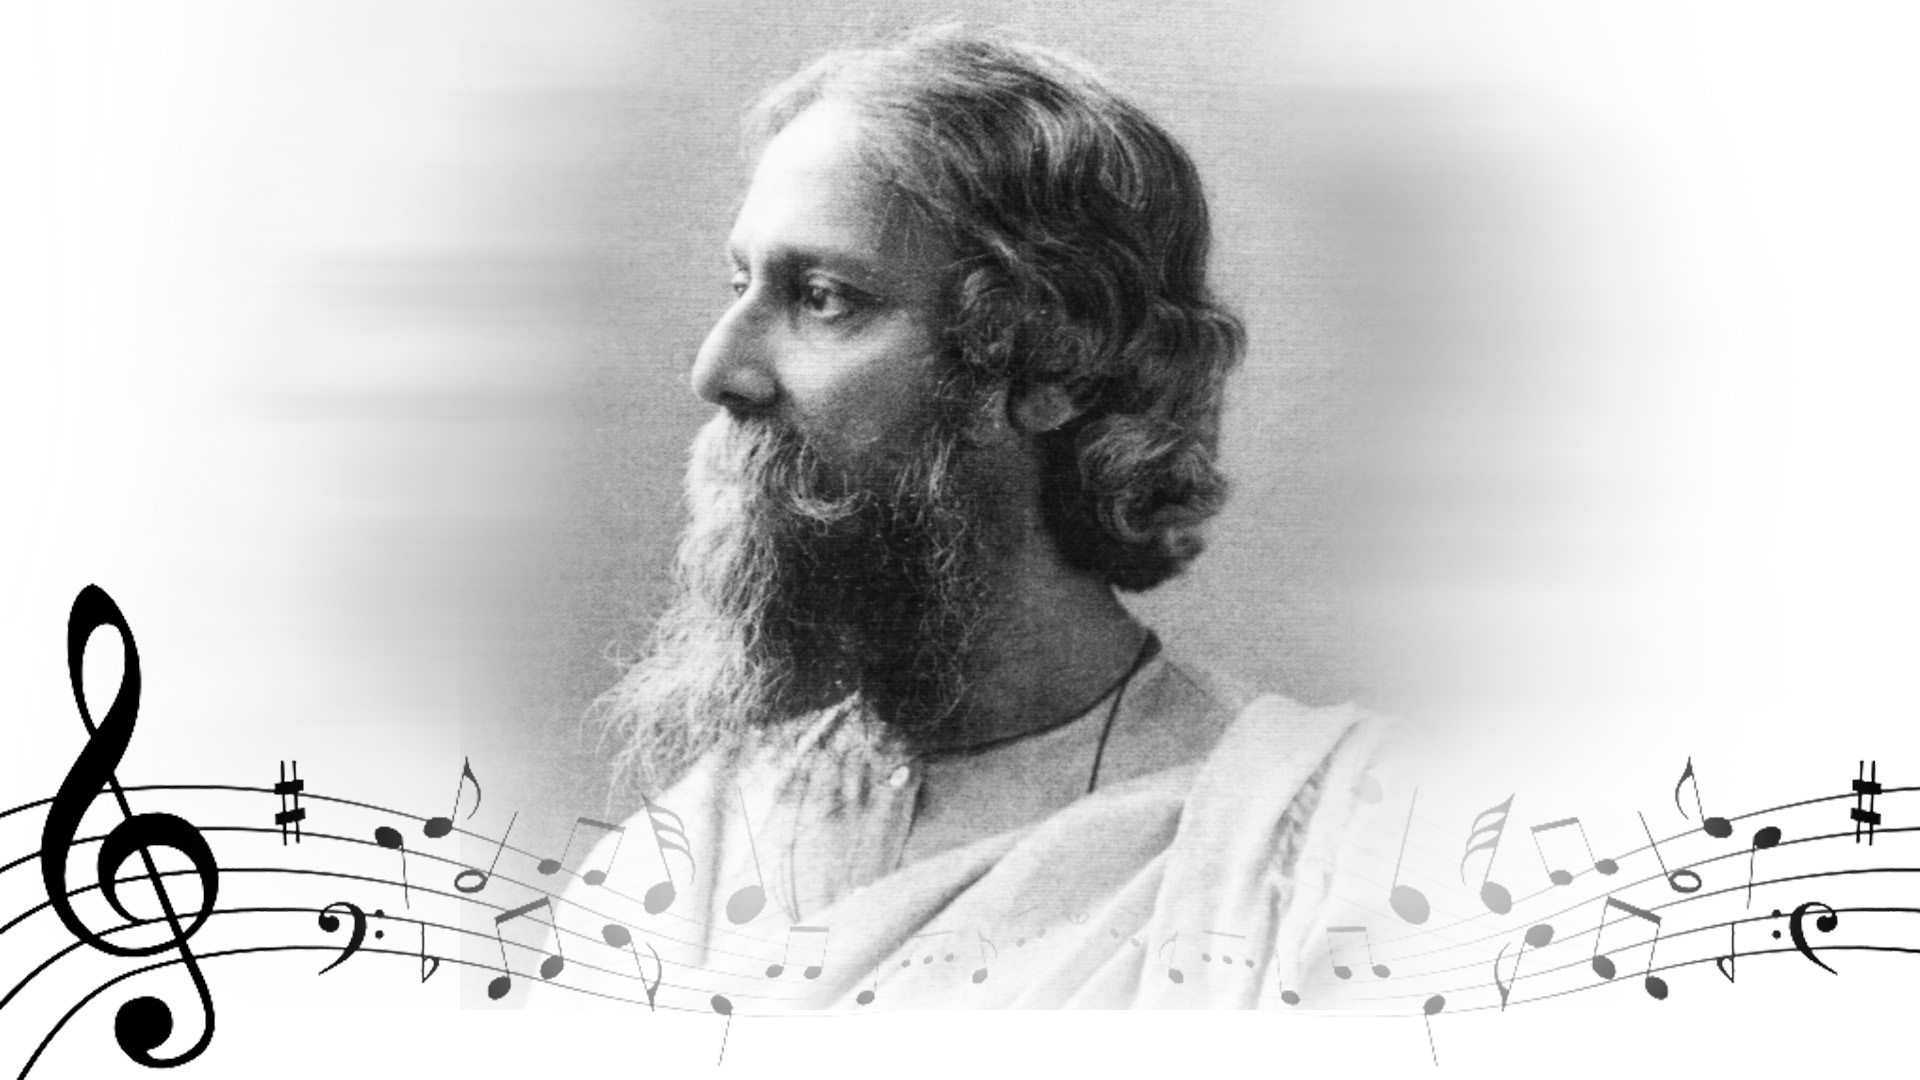 Tagore Beyond Boundaries - Tagore Songs in Western Classical